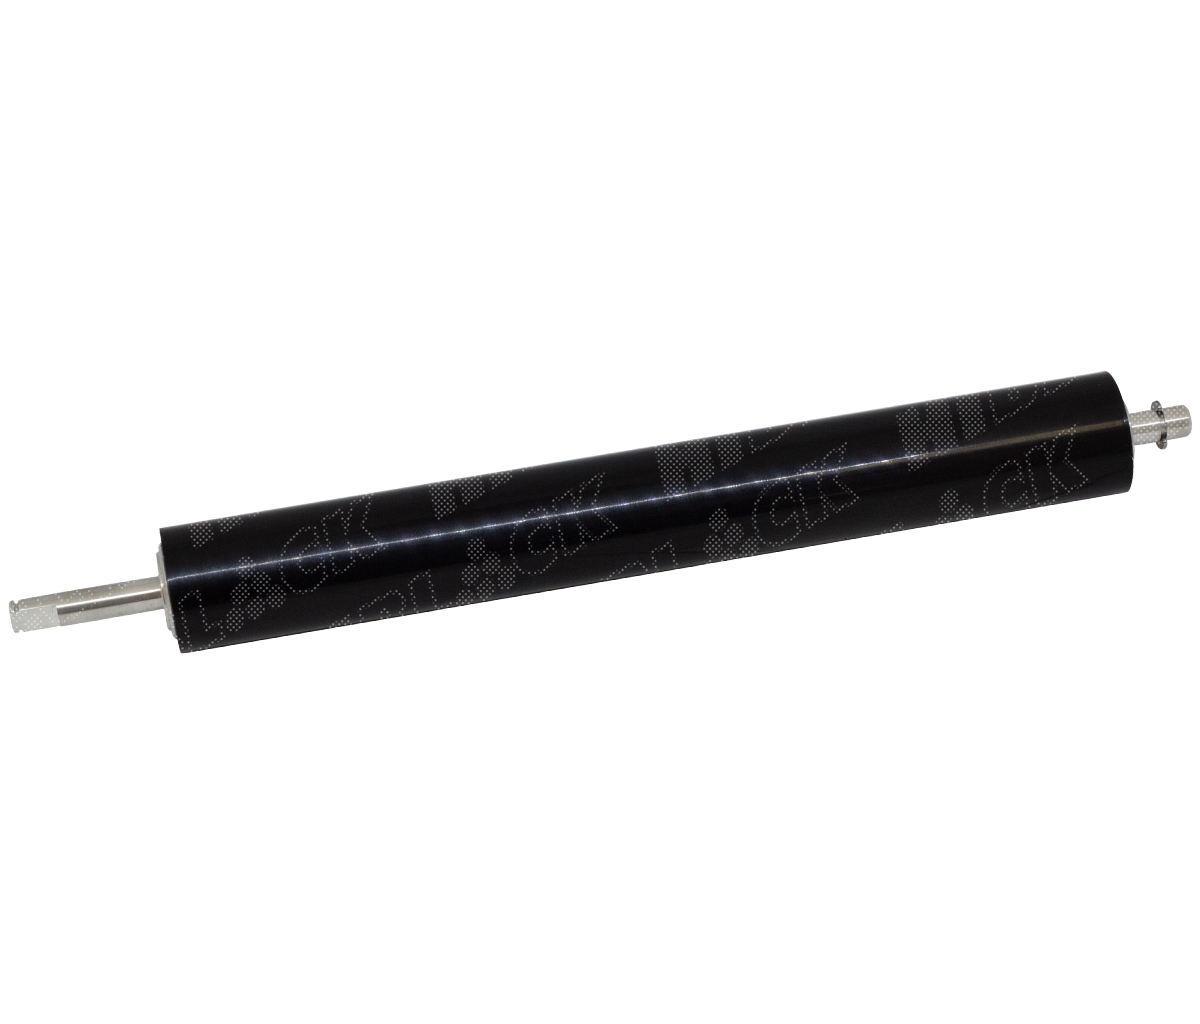 Вал резиновый нижний Hi-Black для HP LJ M601/602/603/604/605/606